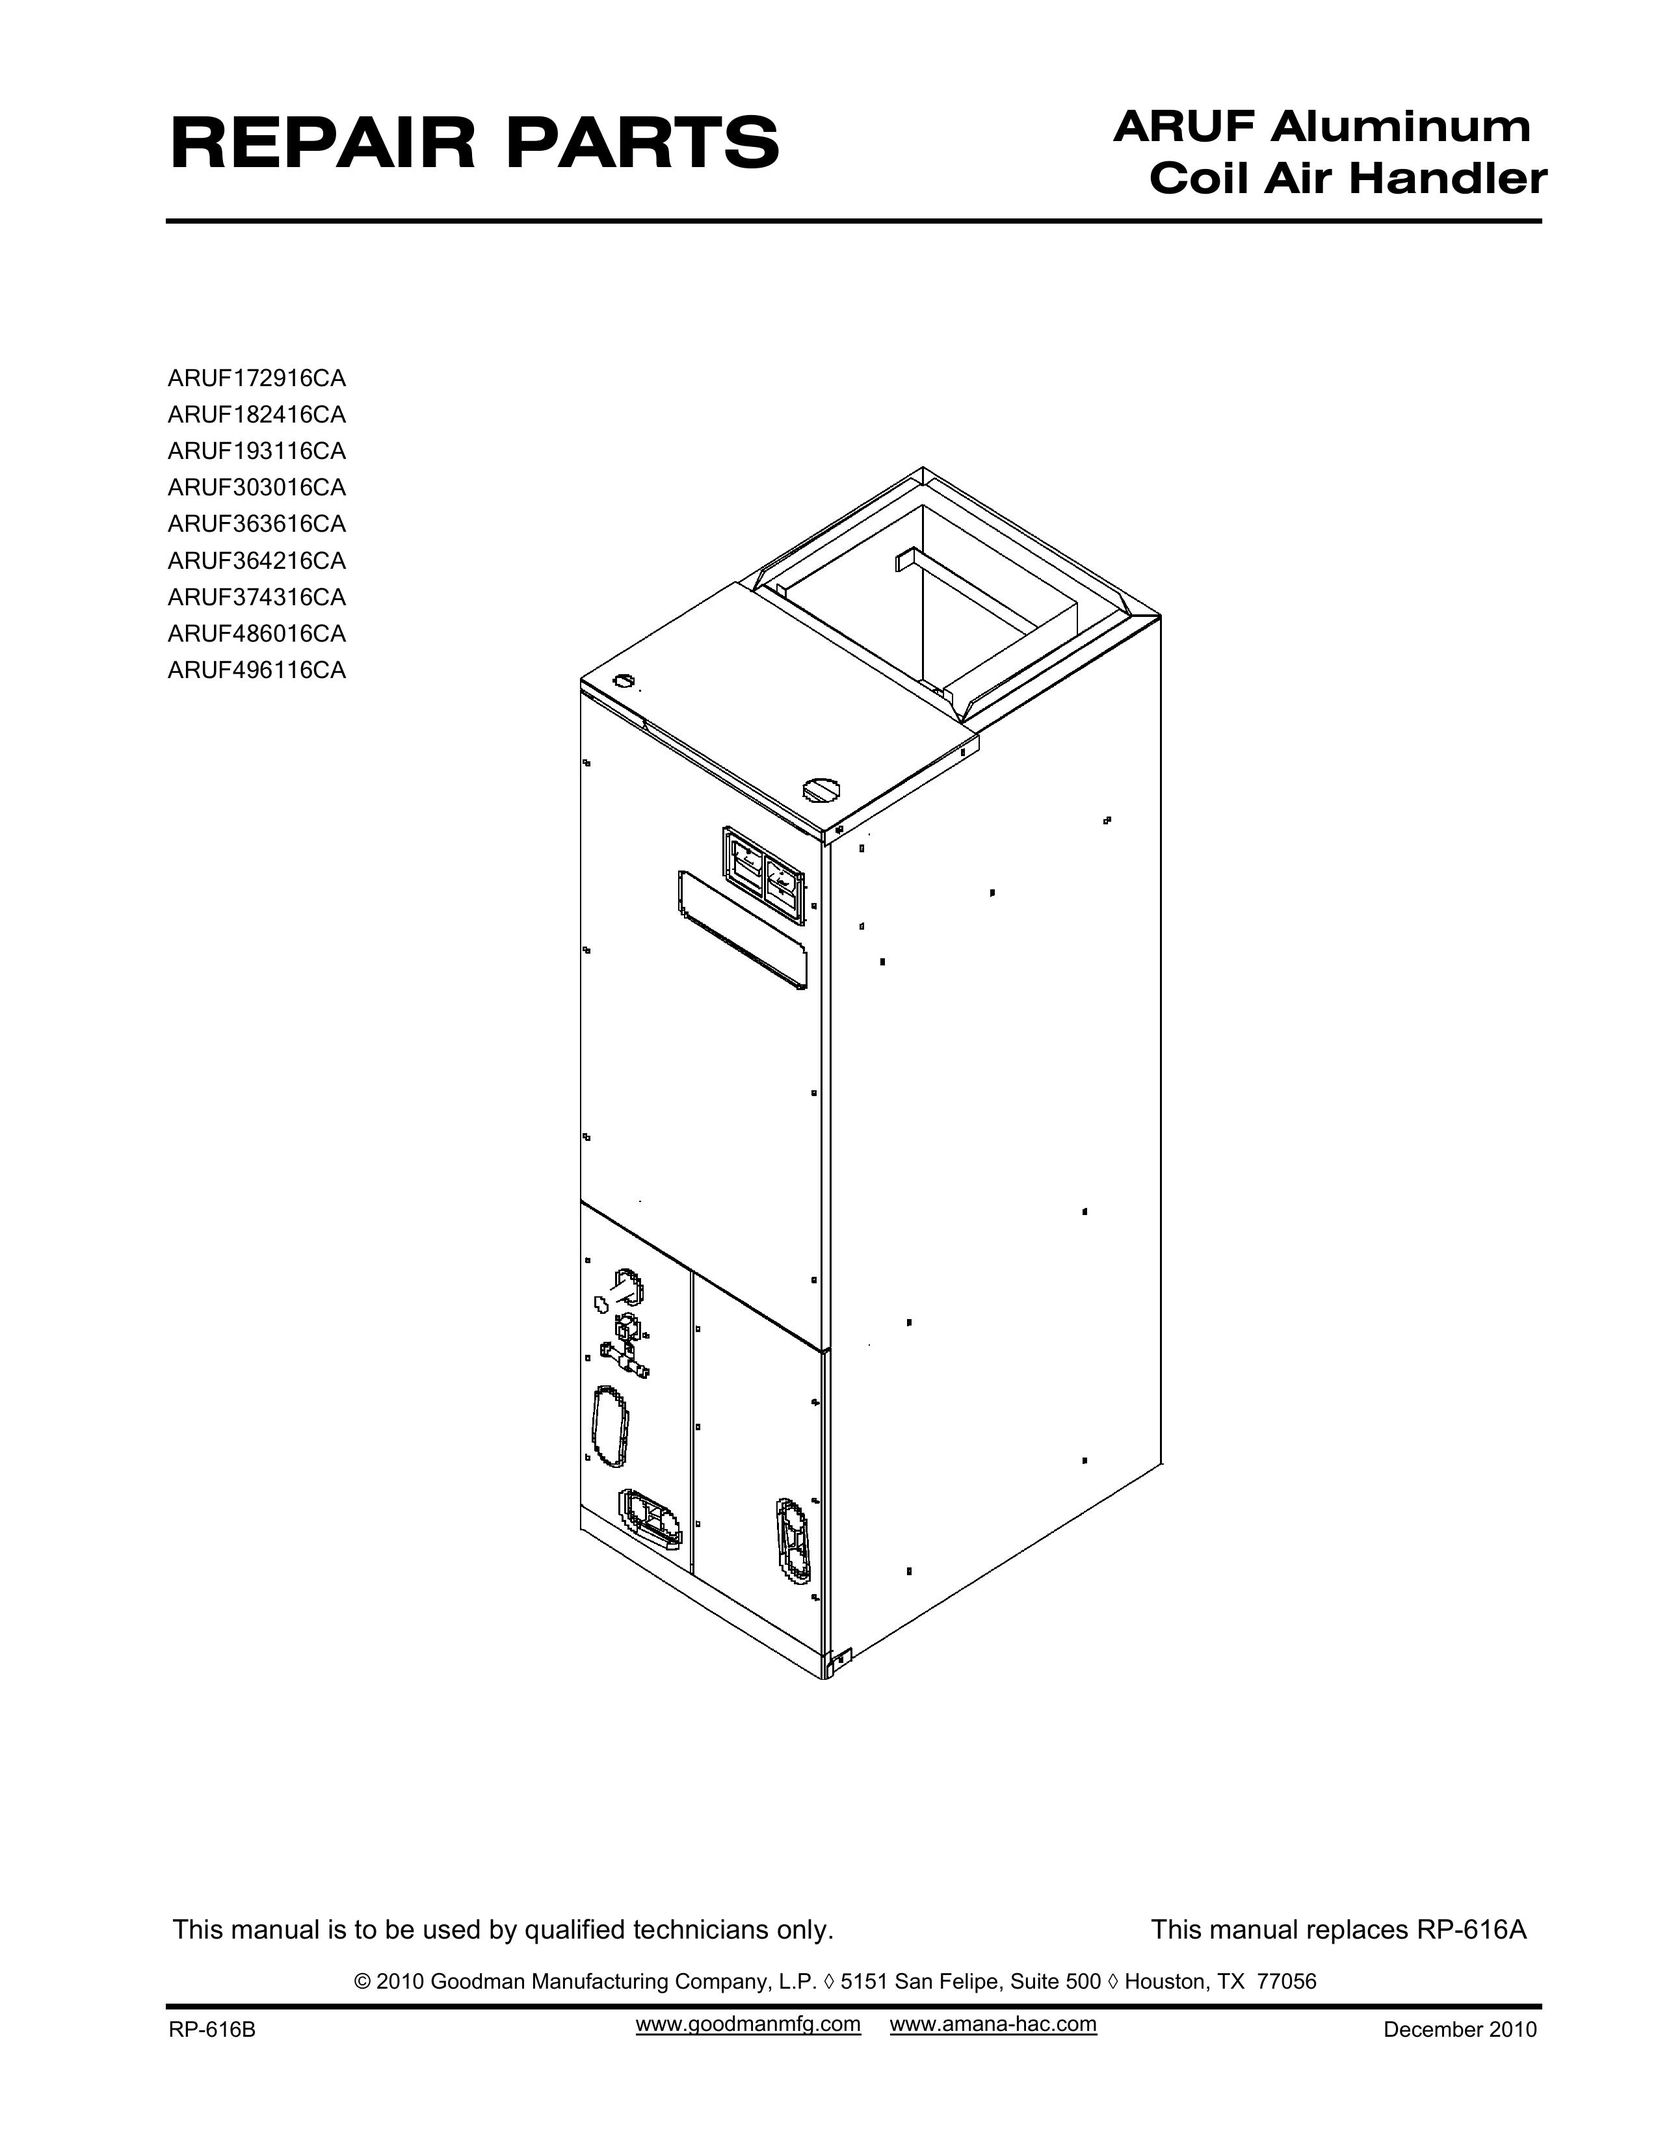 Goodman Mfg ARUF303016CA Air Conditioner User Manual